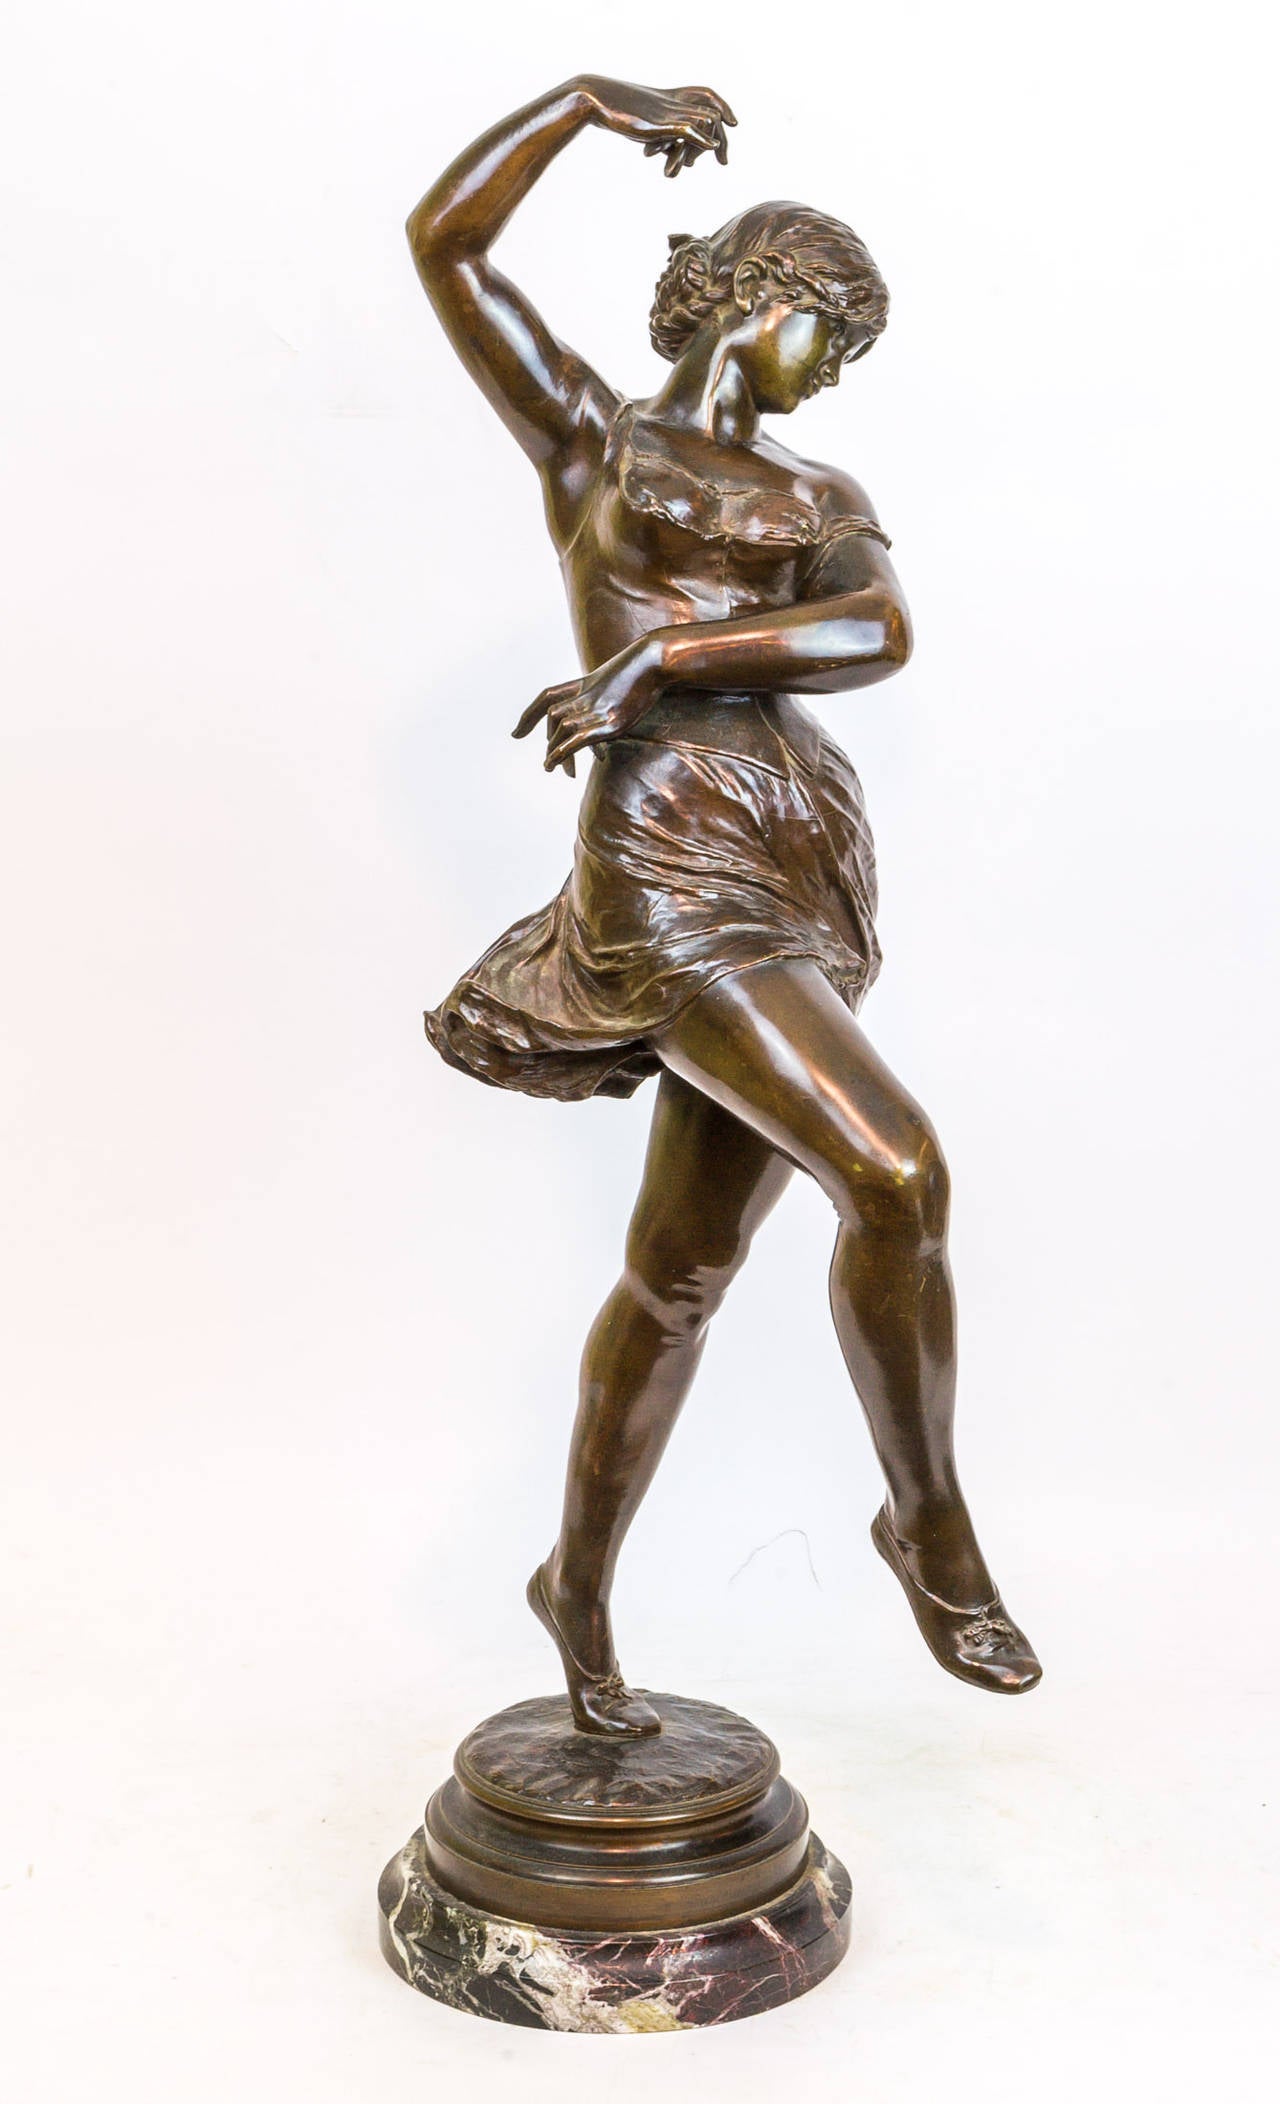 Patinated Bronze Figure of a Ballerina Dancer
Signed: A. Boucher
Stock Number: SC94